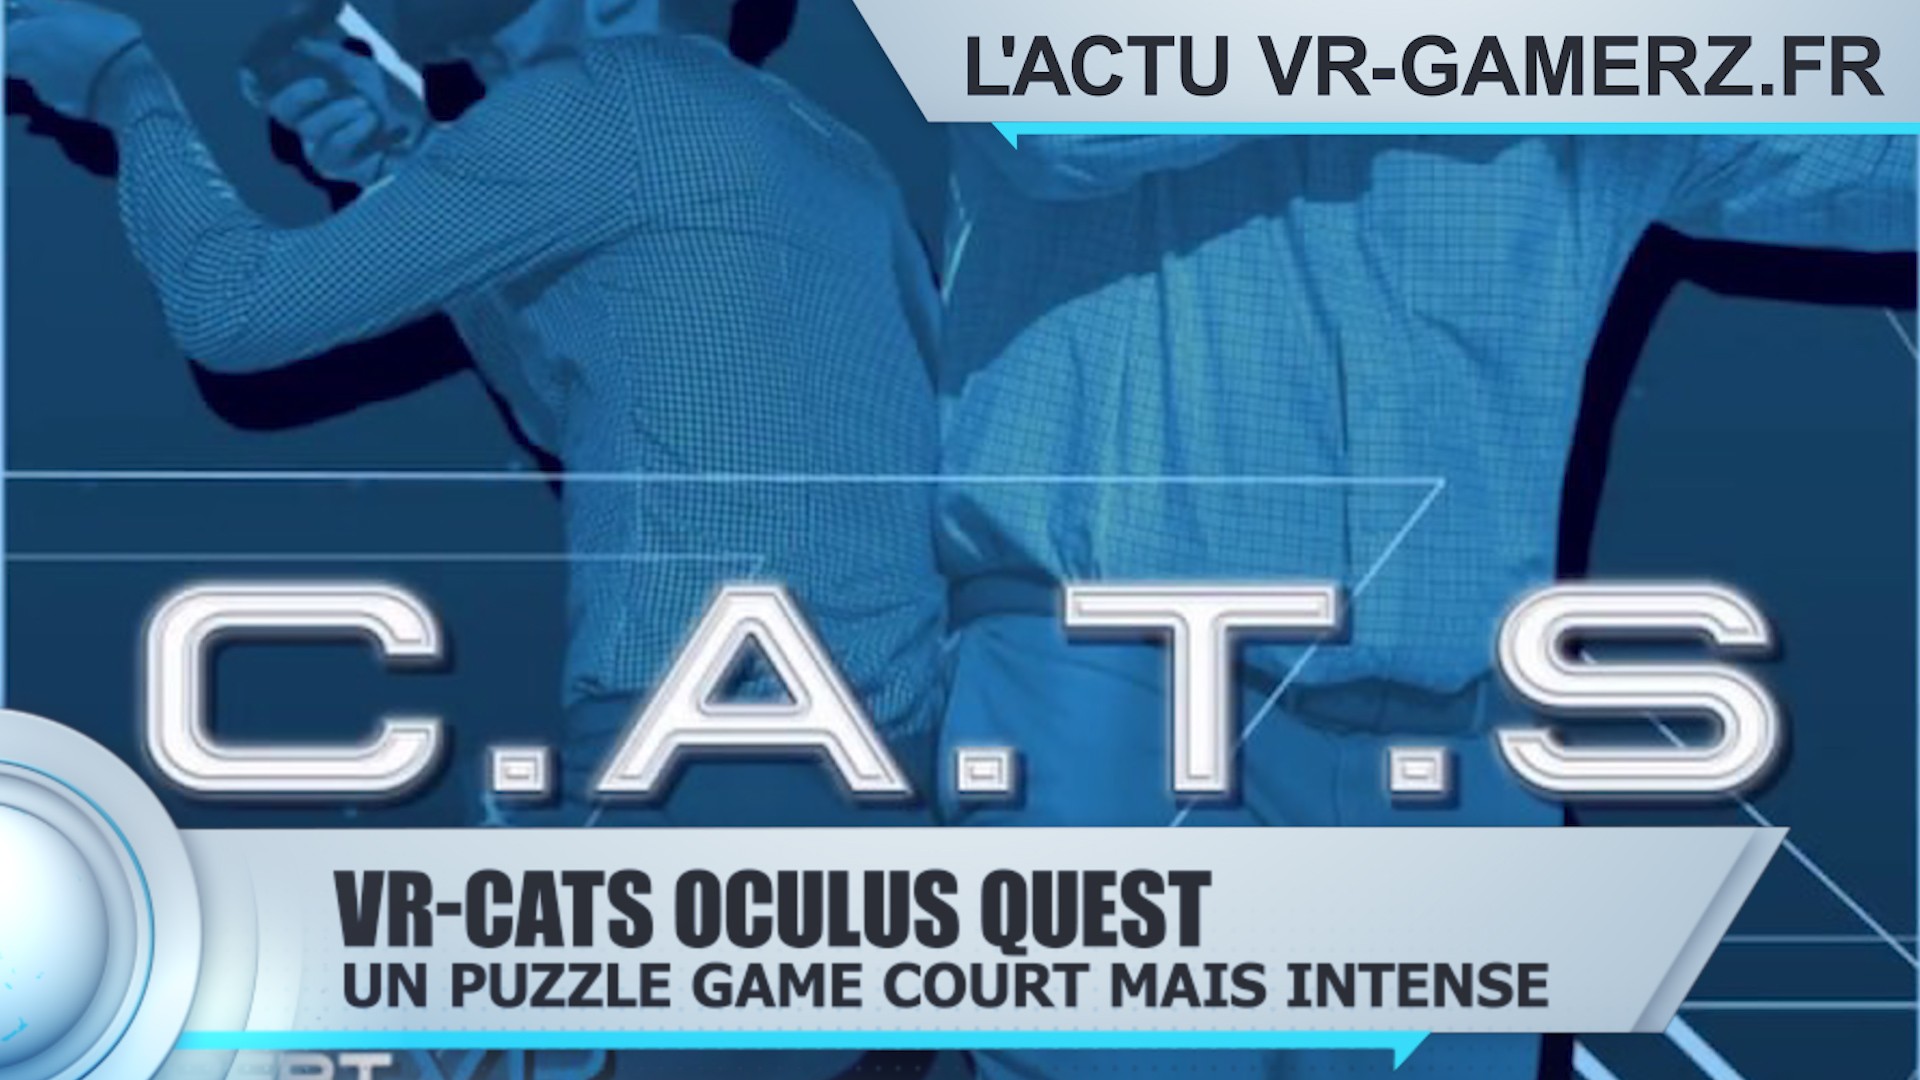 VR-CATS Oculus quest